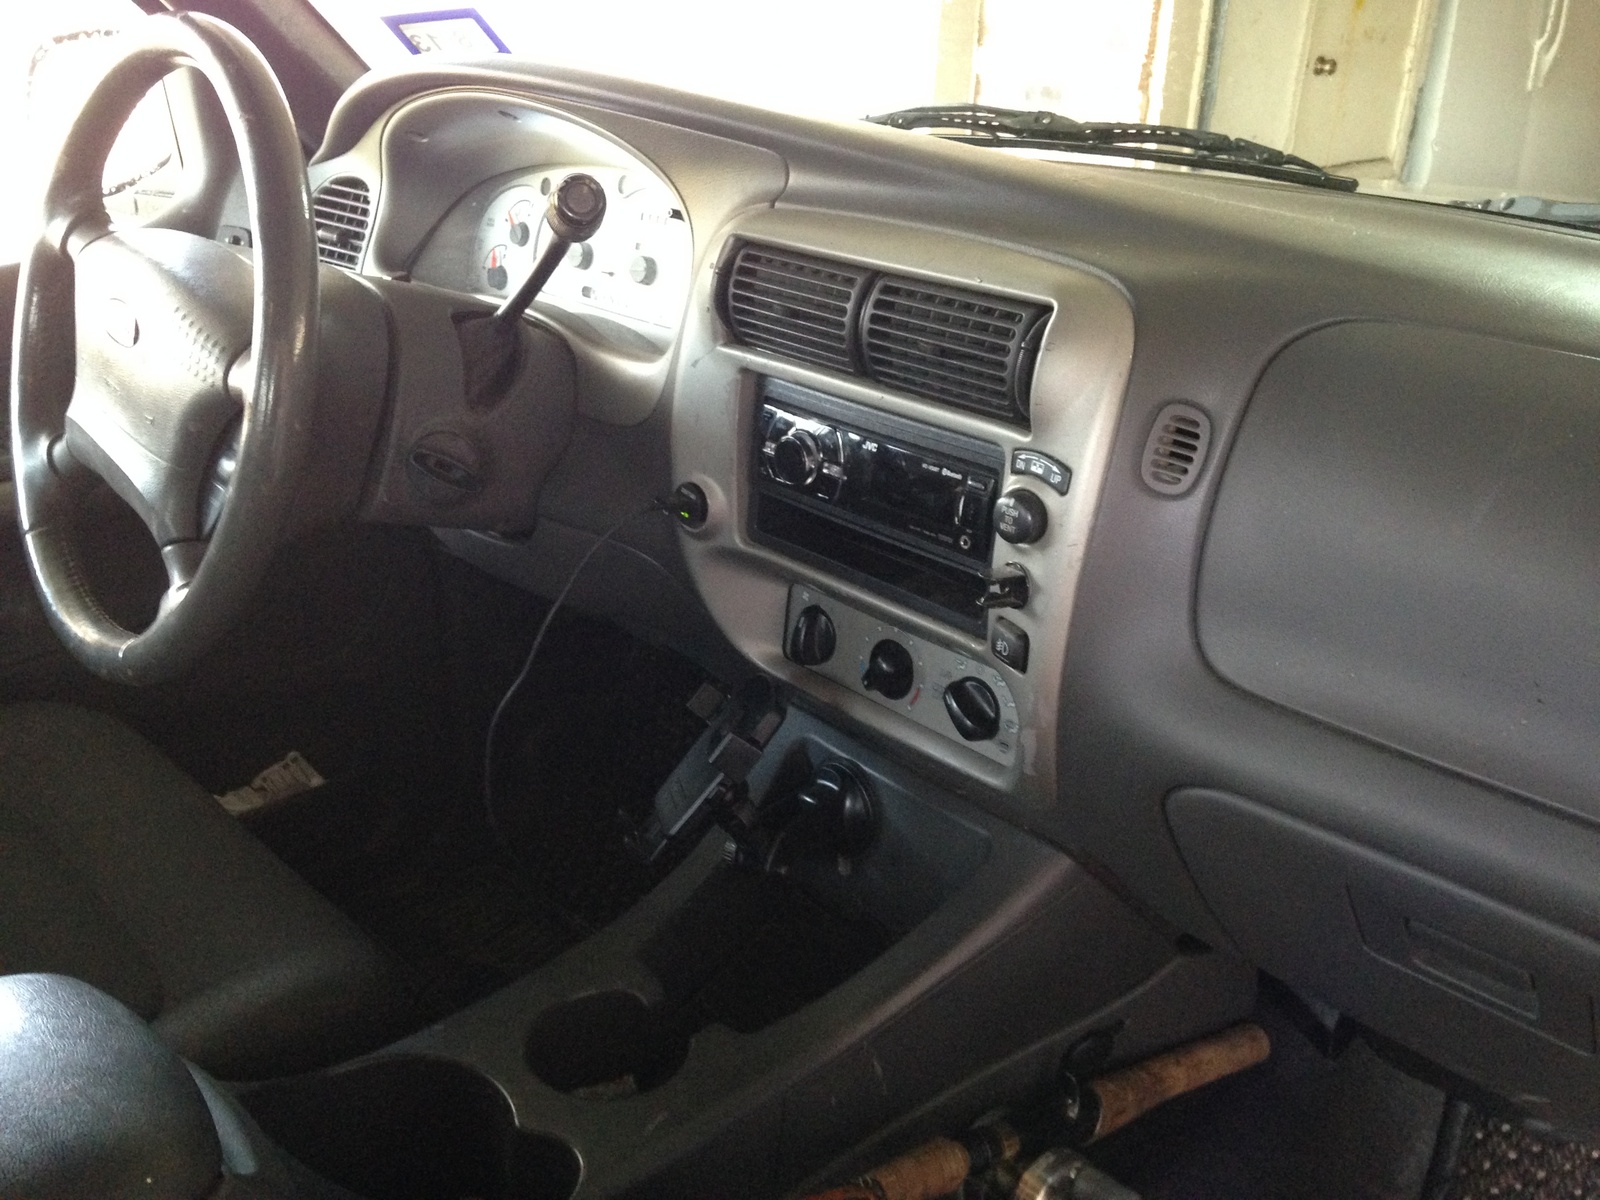 2002 Ford explorer sport trac interior #7